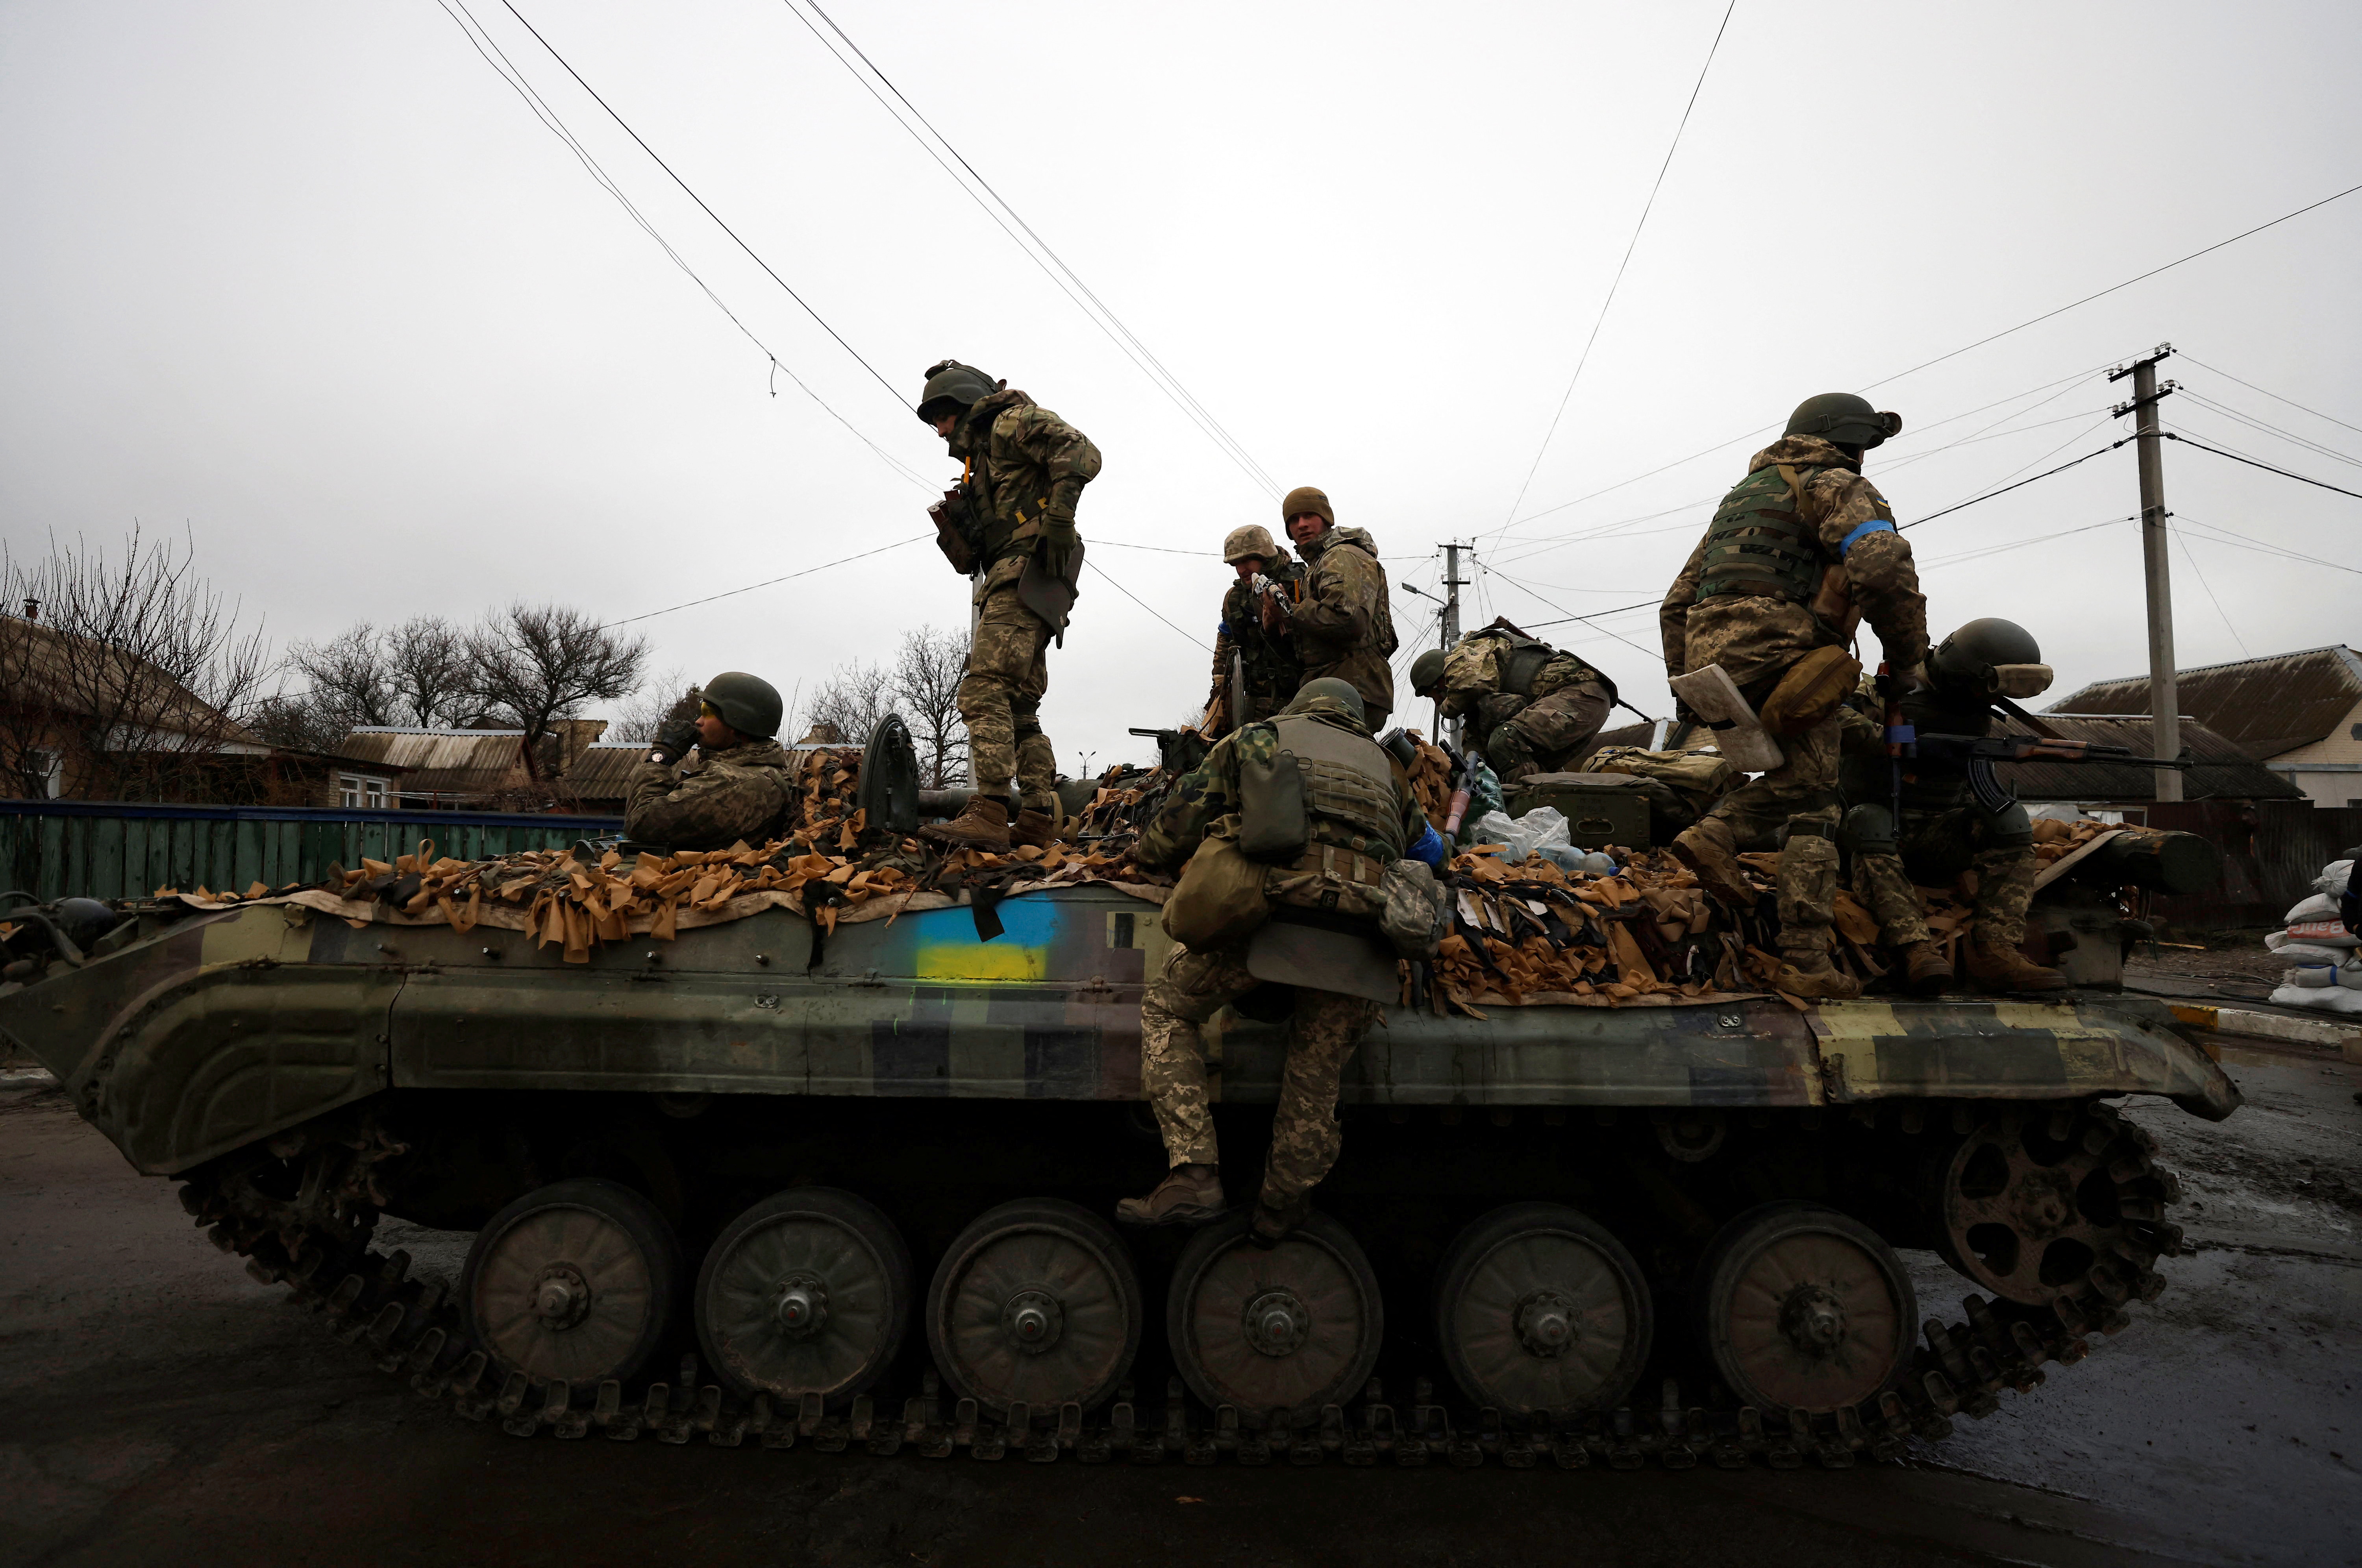 Ukrainian soldiers are pictured in their military vehicle, amid Russia's invasion on Ukraine in Bucha, in Kyiv region, Ukraine April 2, 2022. REUTERS/Zohra Bensemra